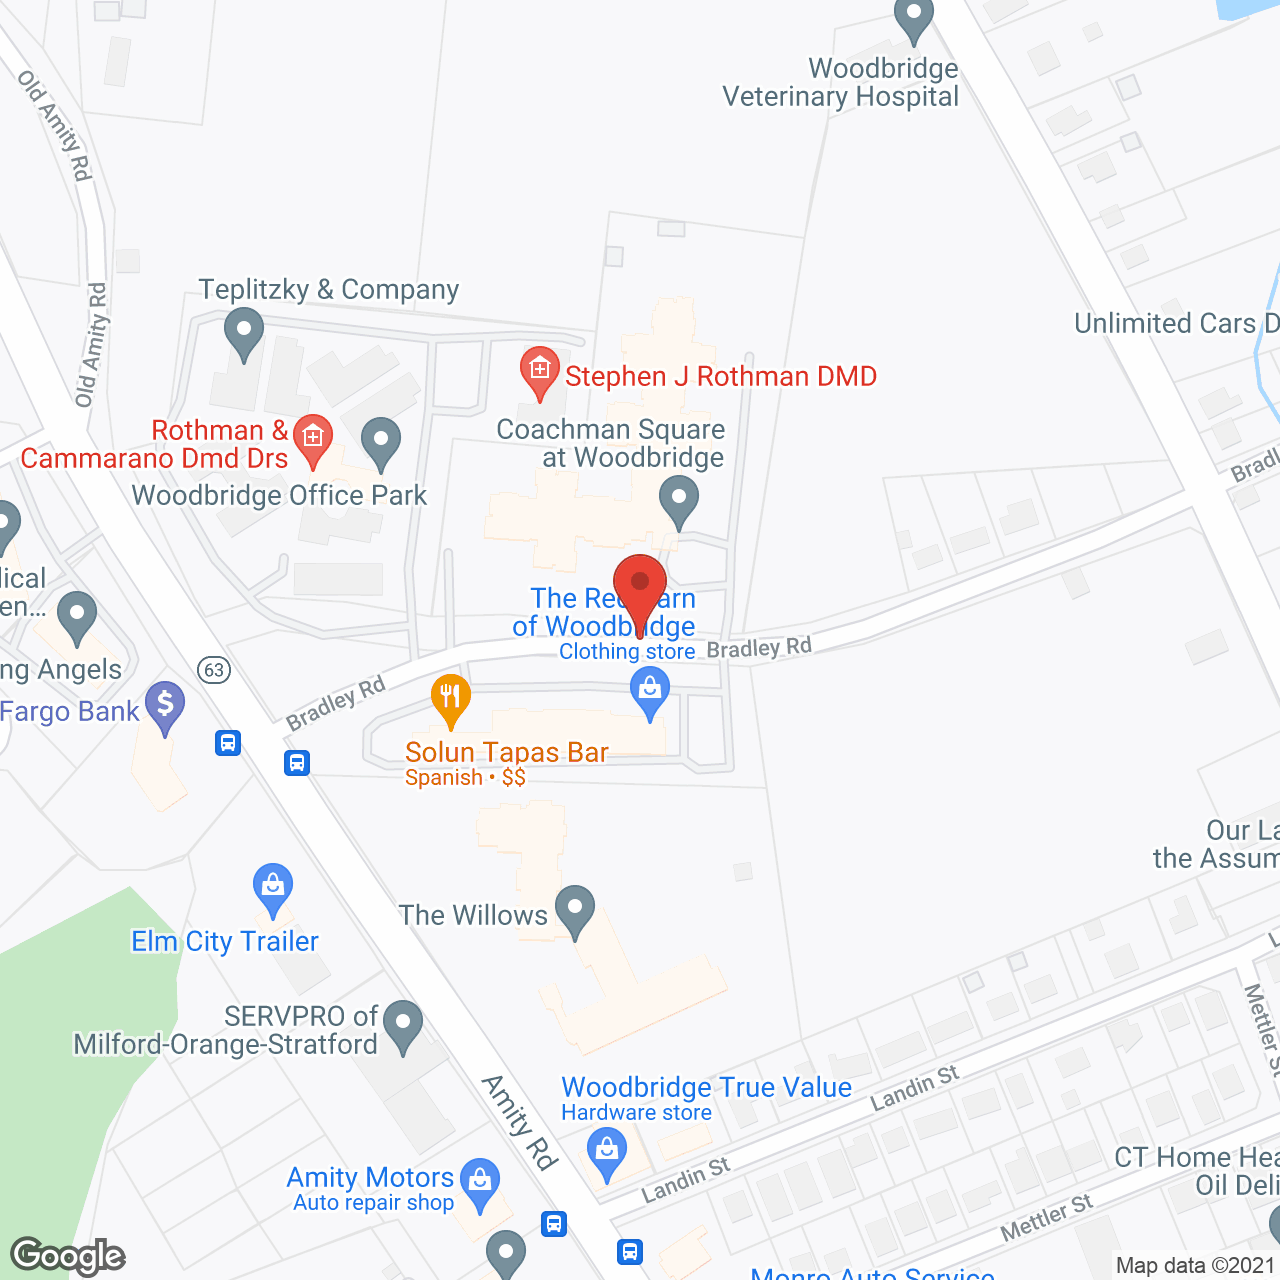 Coachman Square at Woodbridge in google map